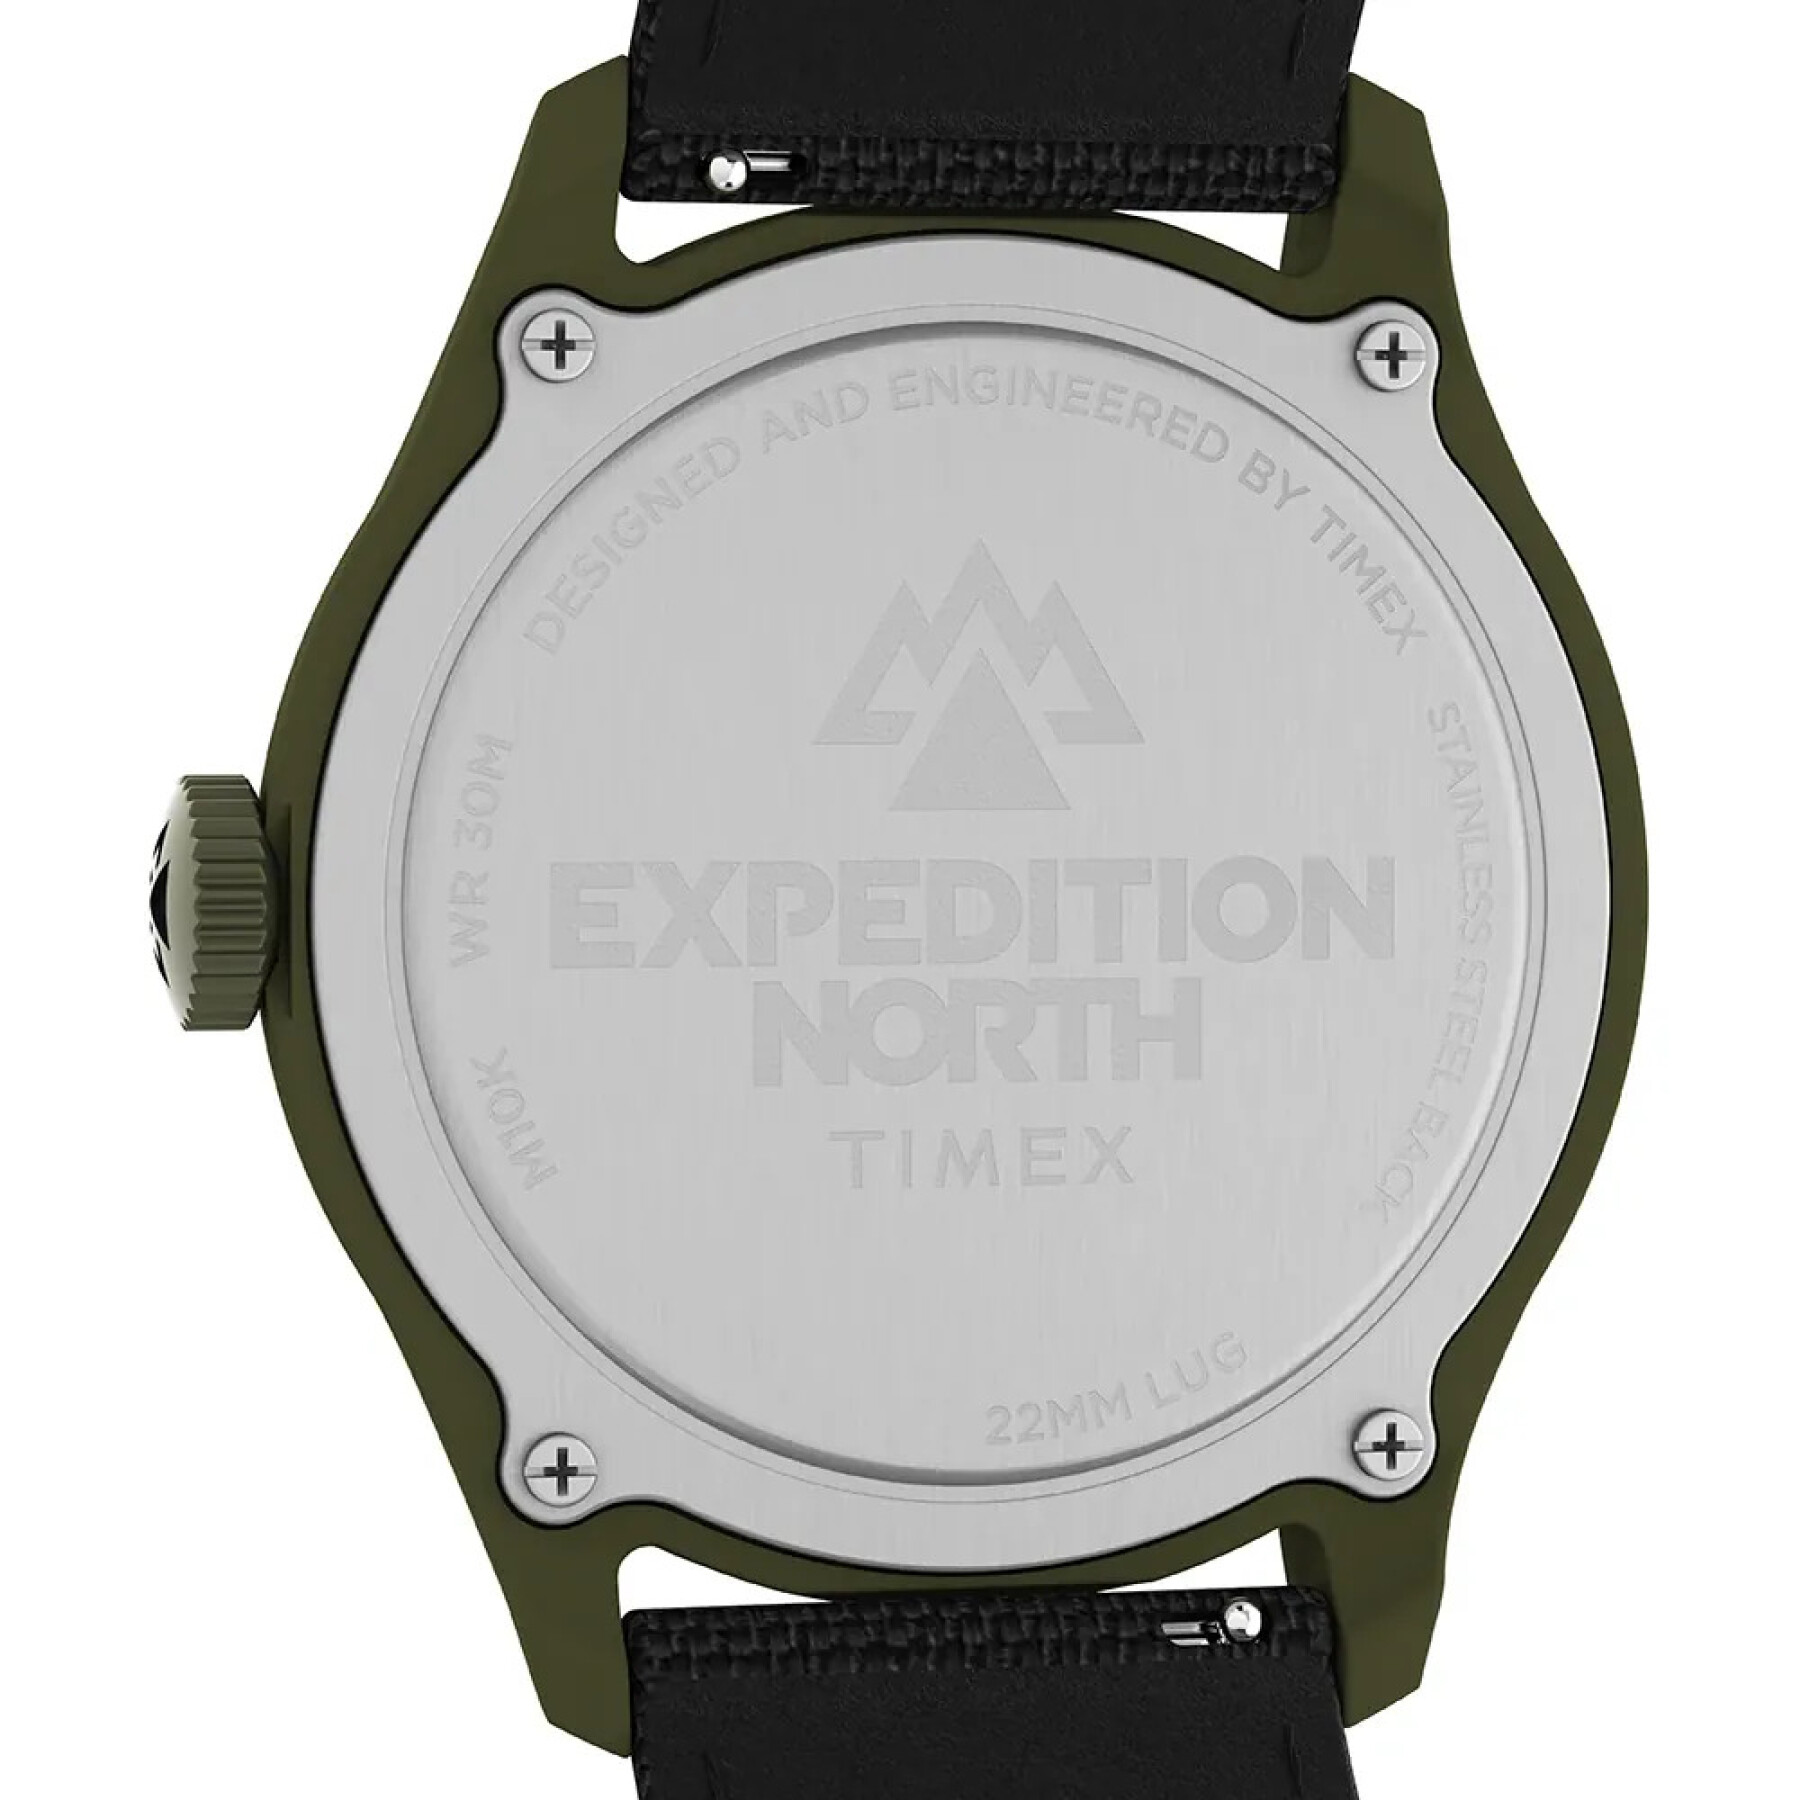 Kijk naar Timex Expedition North Traprock